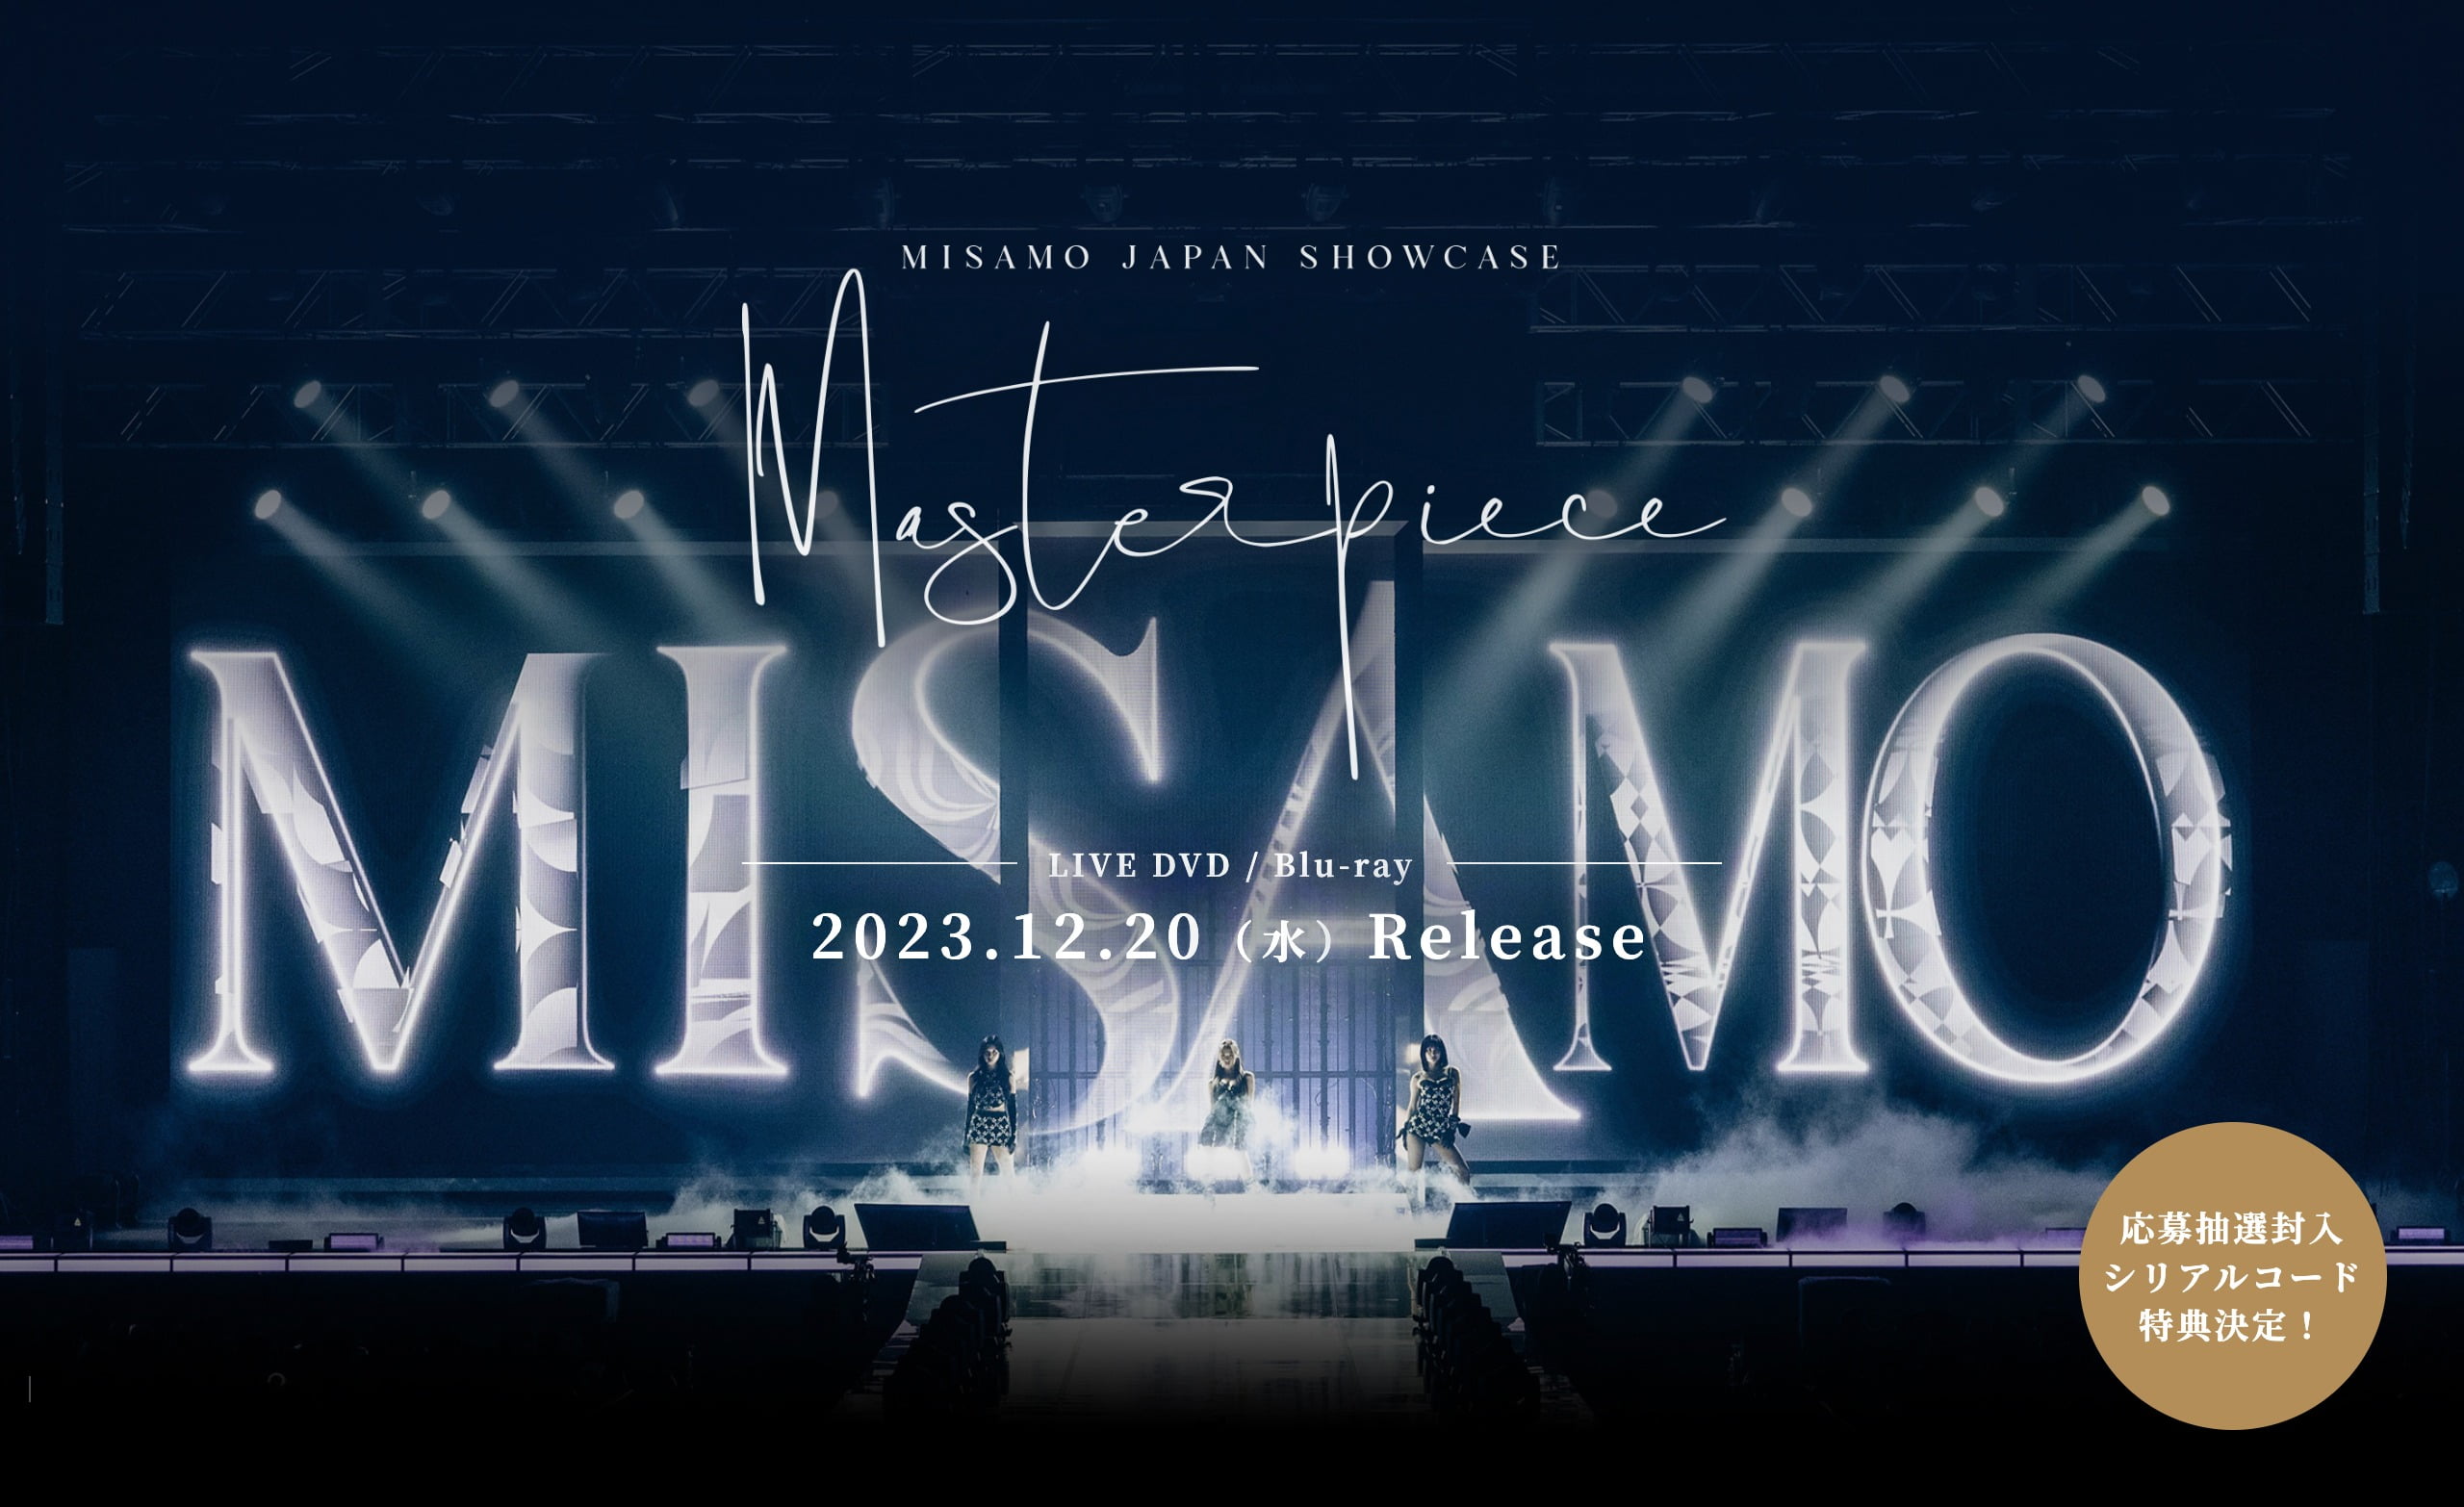 MISAMO JAPAN SHOWCASE Masterpiece LIVE DVD / Blu-ray特設 | MUSIC WEB CLIPS  - バンド・アーティスト・音楽関連のWEBデザイン ギャラリーサイト